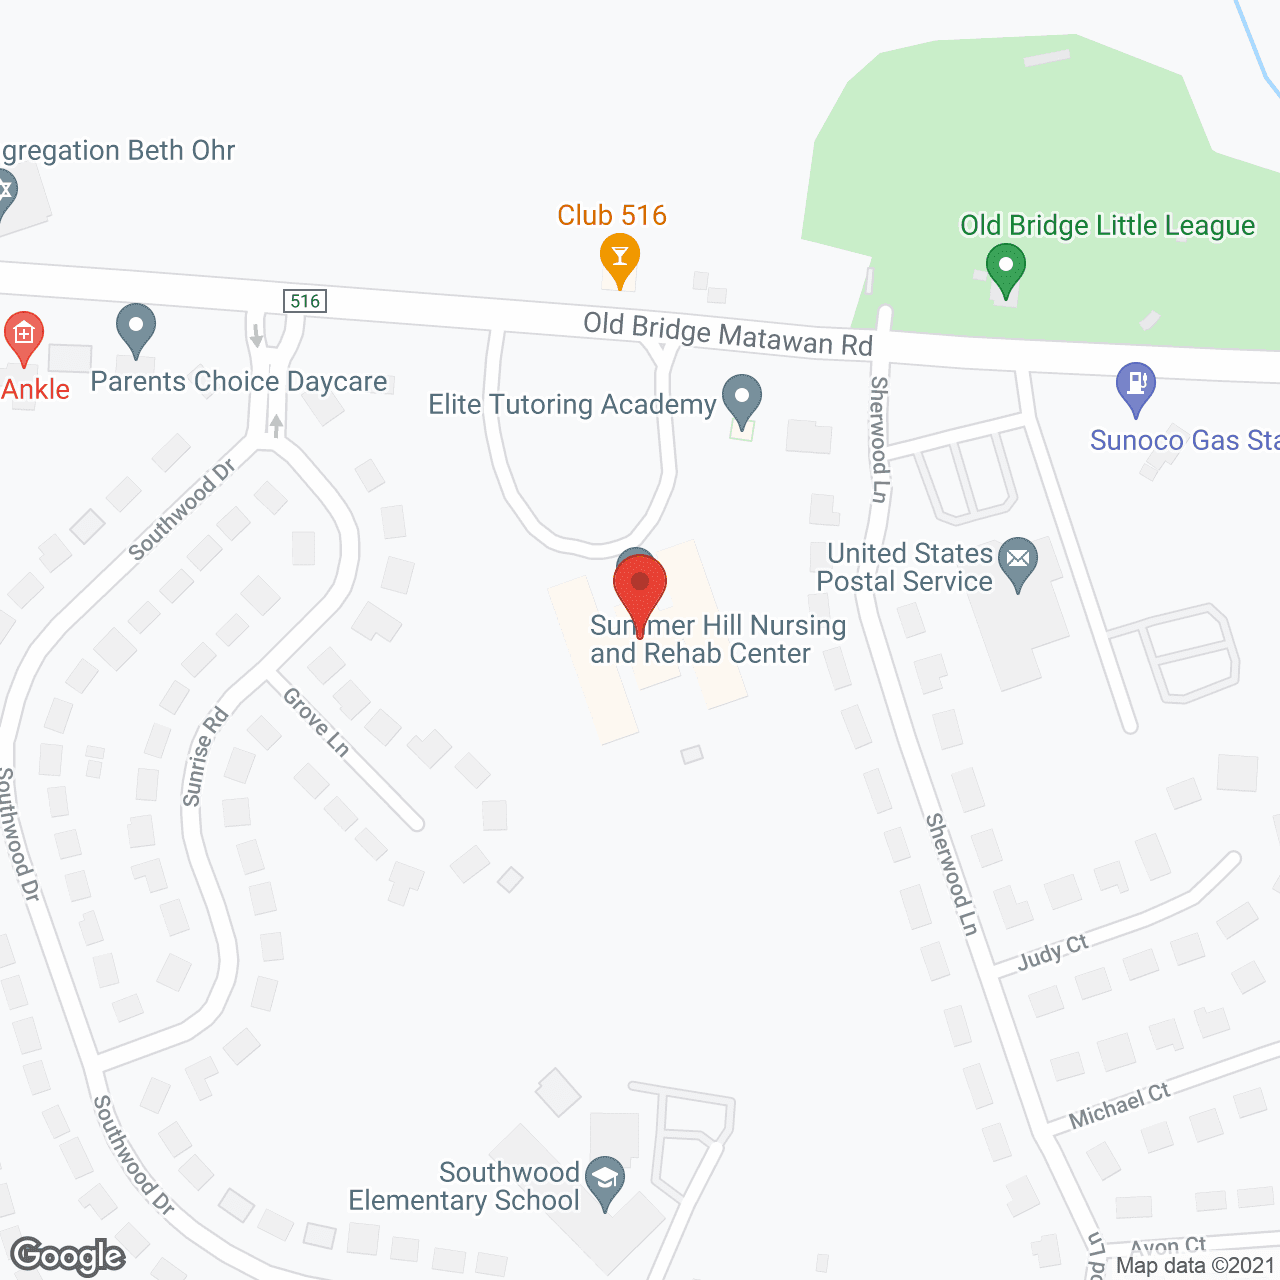 Summer Hill Nursing and Rehabilitation Center in google map